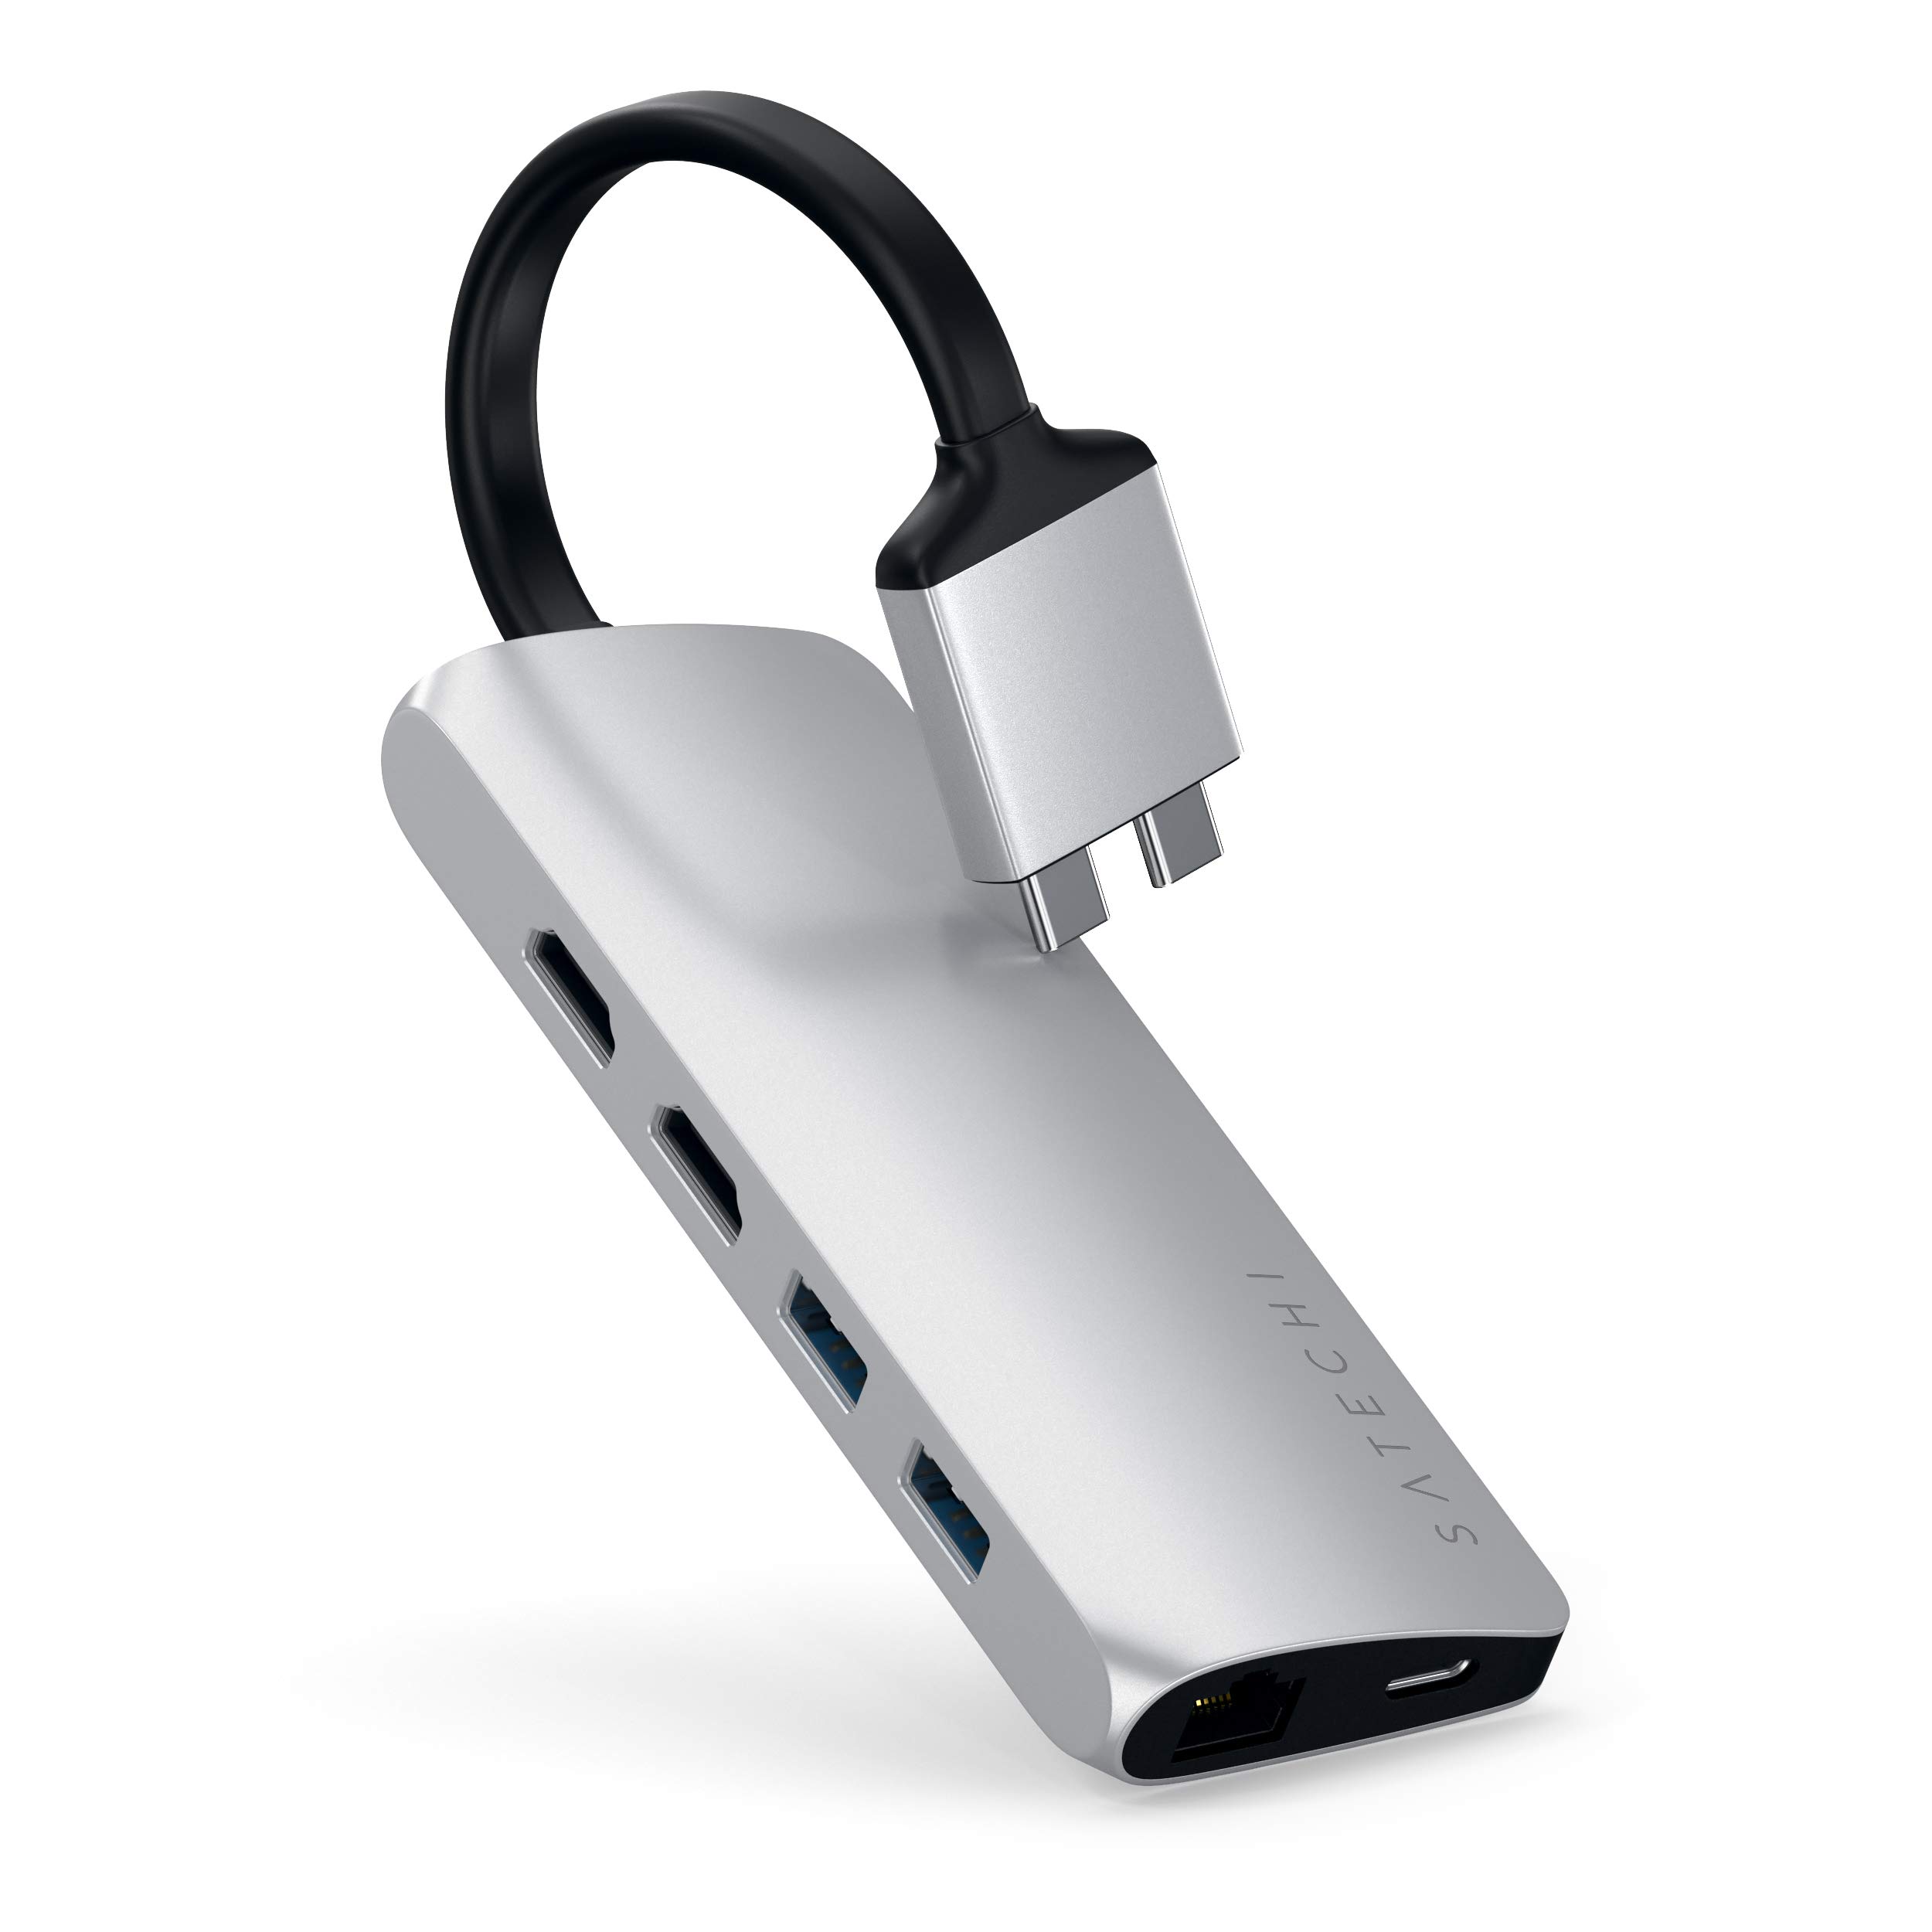 Satechi USB-C デュアル マルチメディア ハブ (シルバー) 4K HDMIx2, USB C PD, イーサネット SDカードリーダー, USB3.0 (MacBook Pro/Air 2018以降対応)